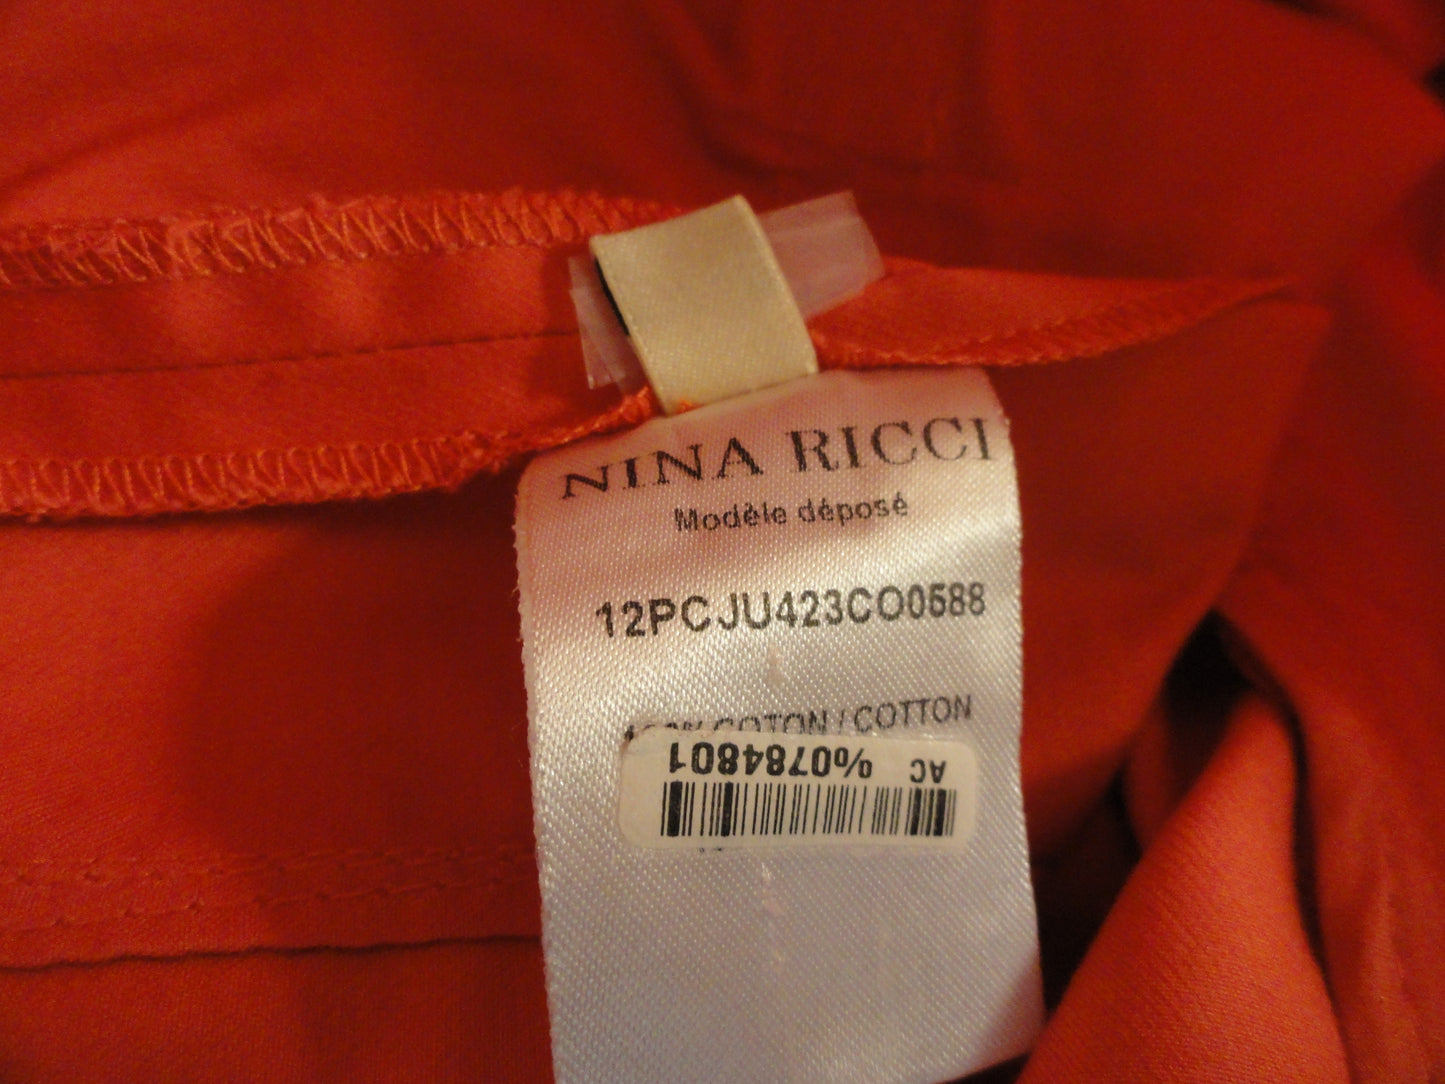 Nina Ricci Above the Knee Red Skirt Size 29" SKU 000169